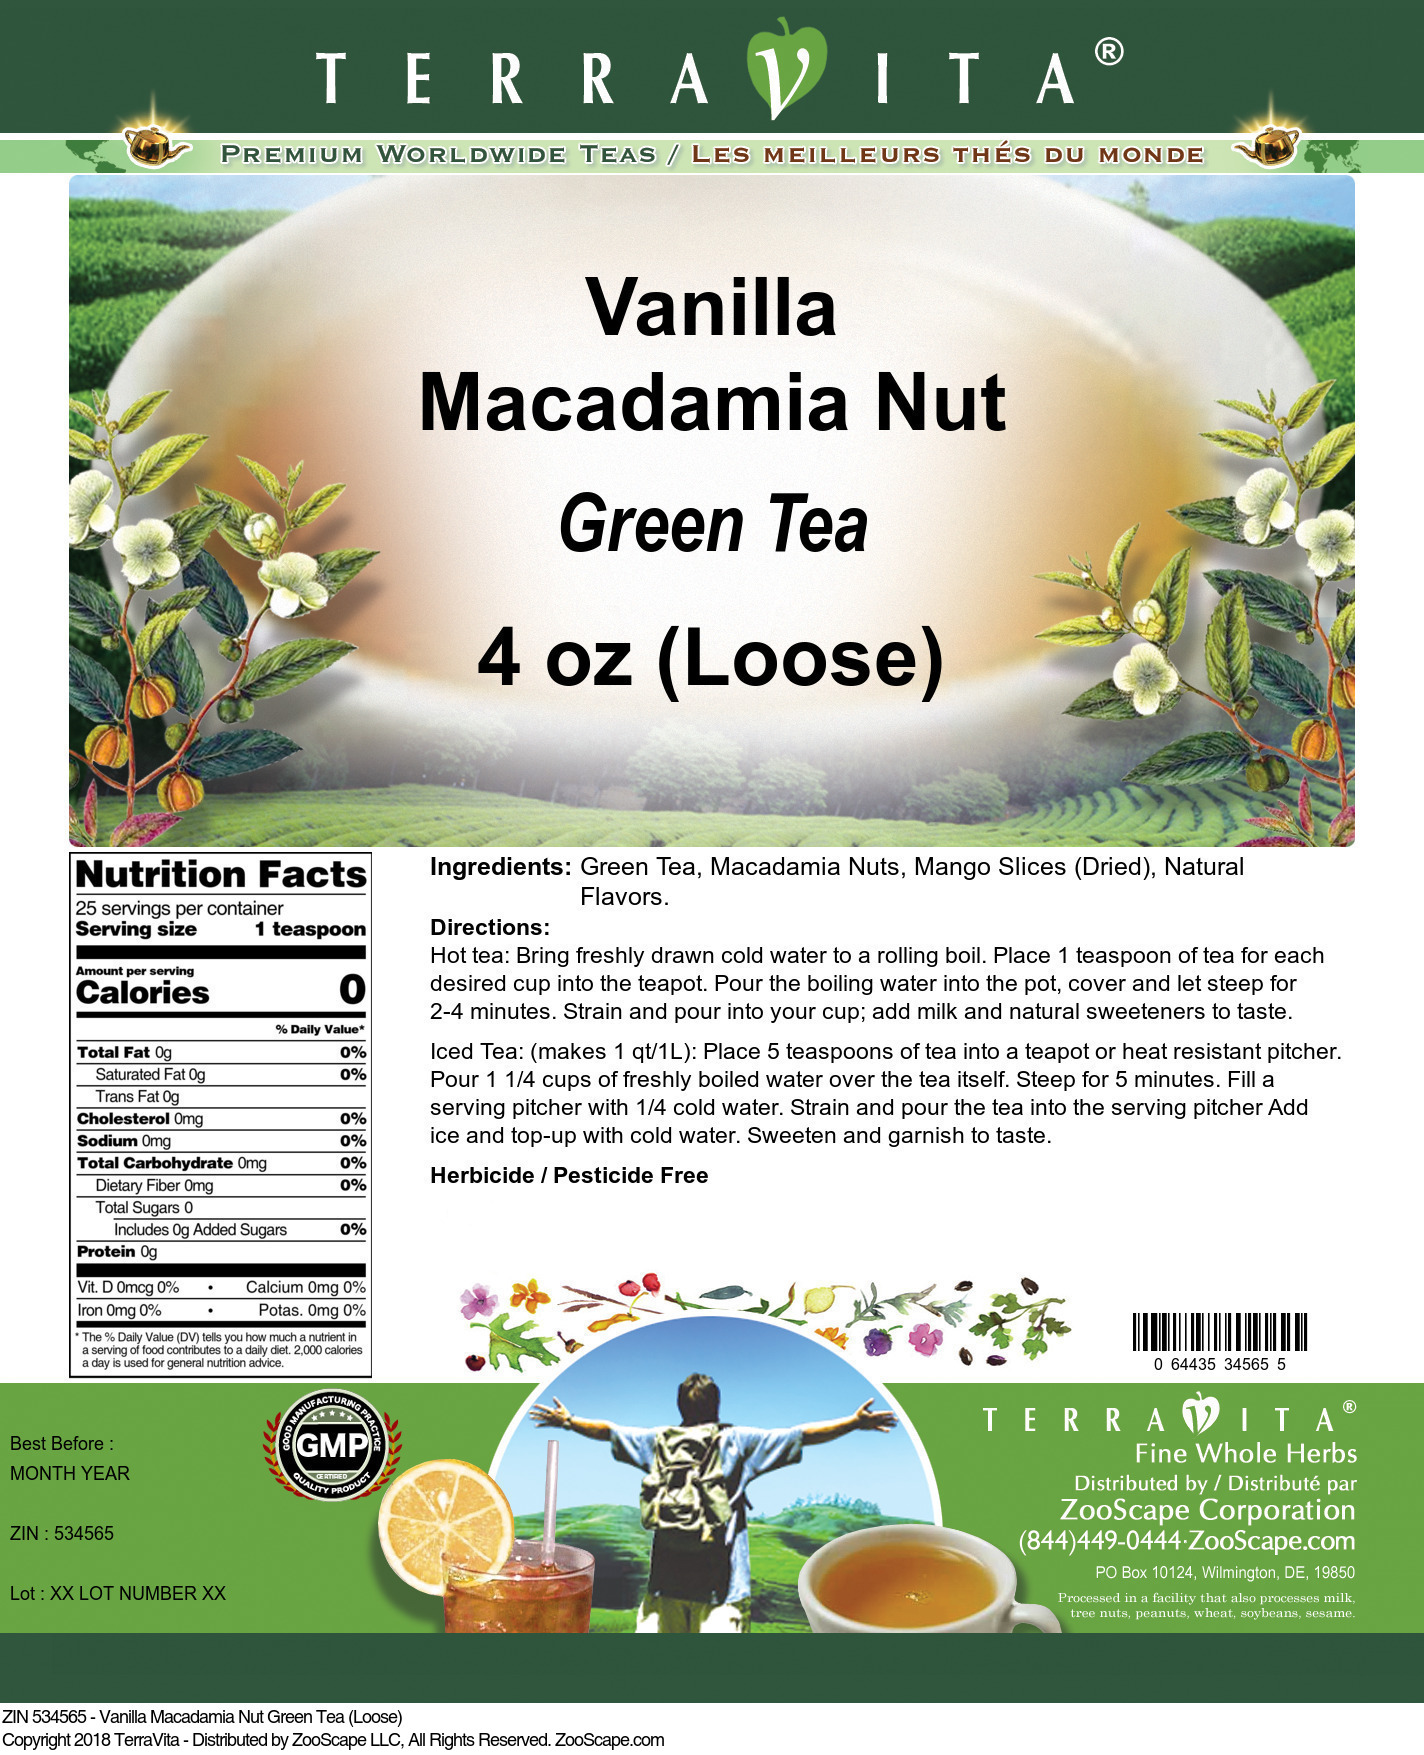 Vanilla Macadamia Nut Green Tea (Loose) - Label